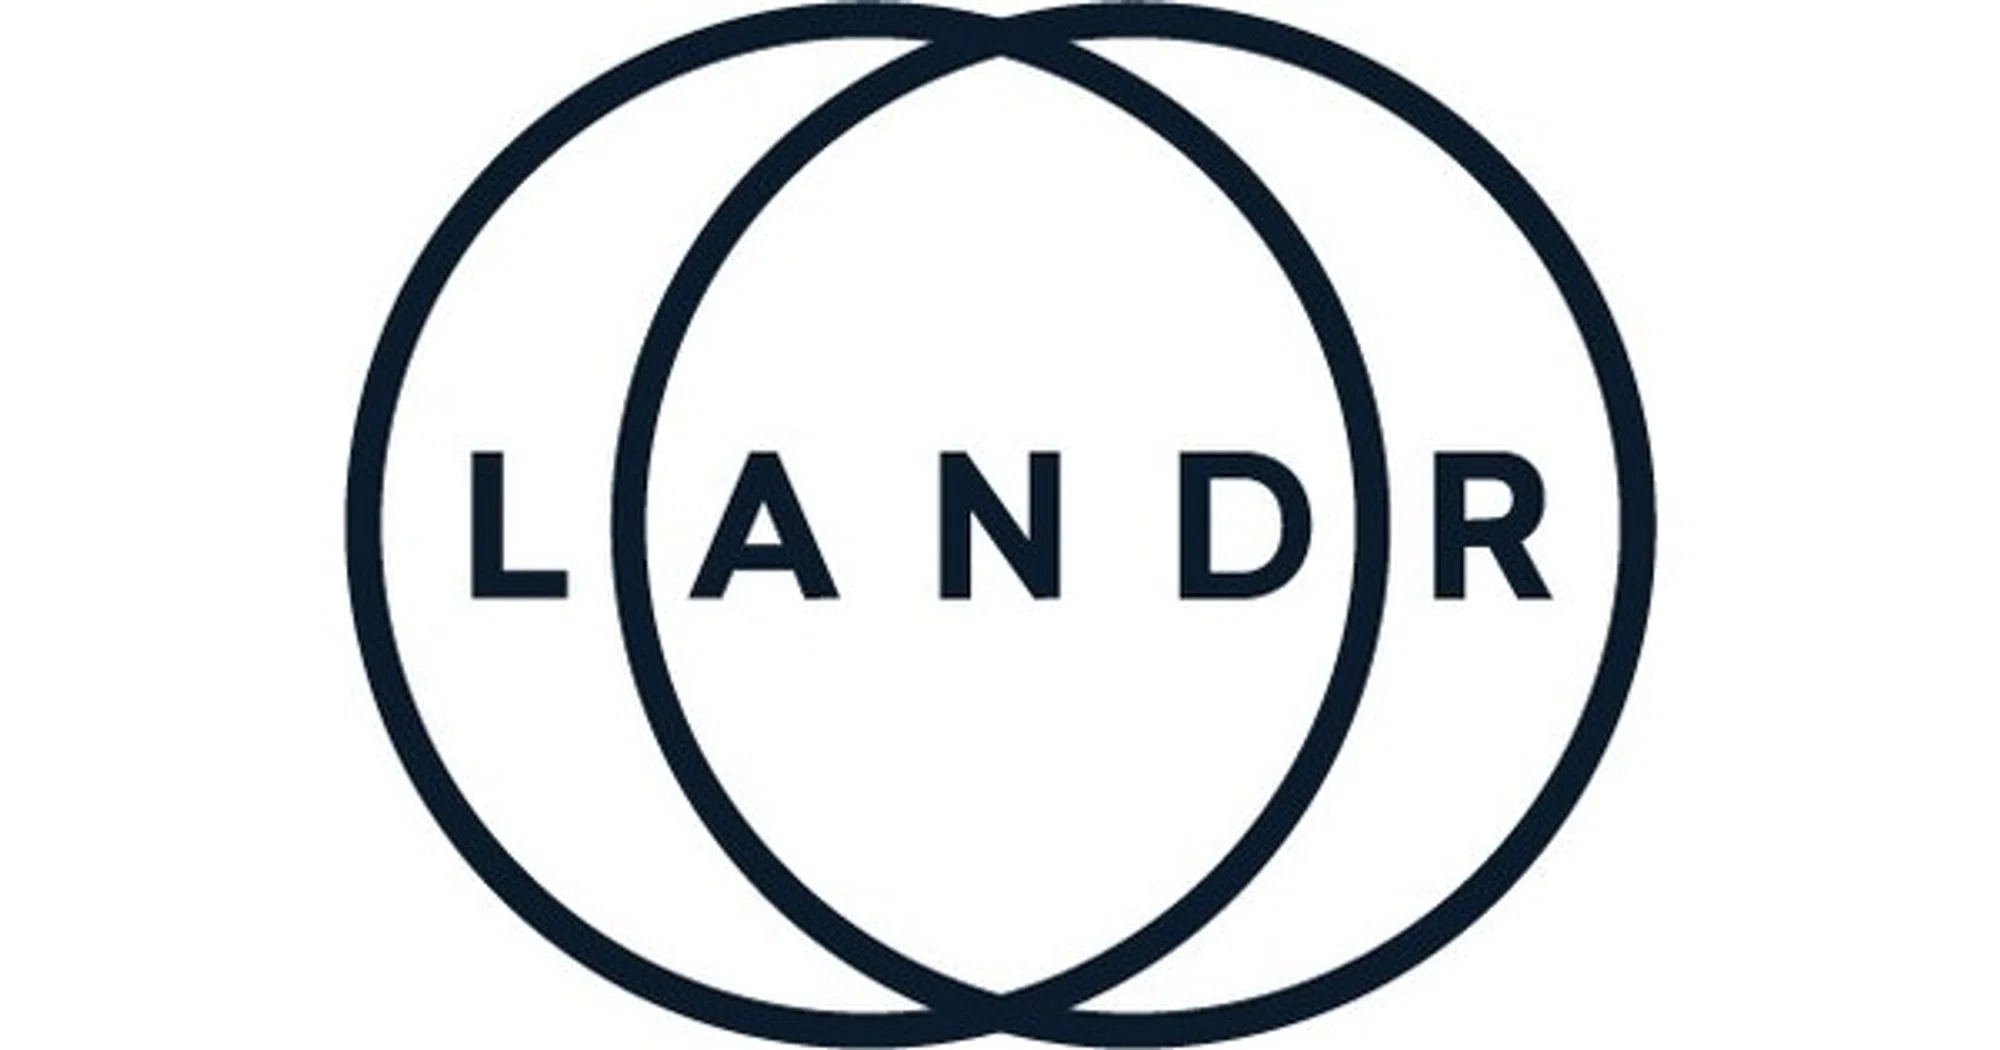 landr coupon code 2017